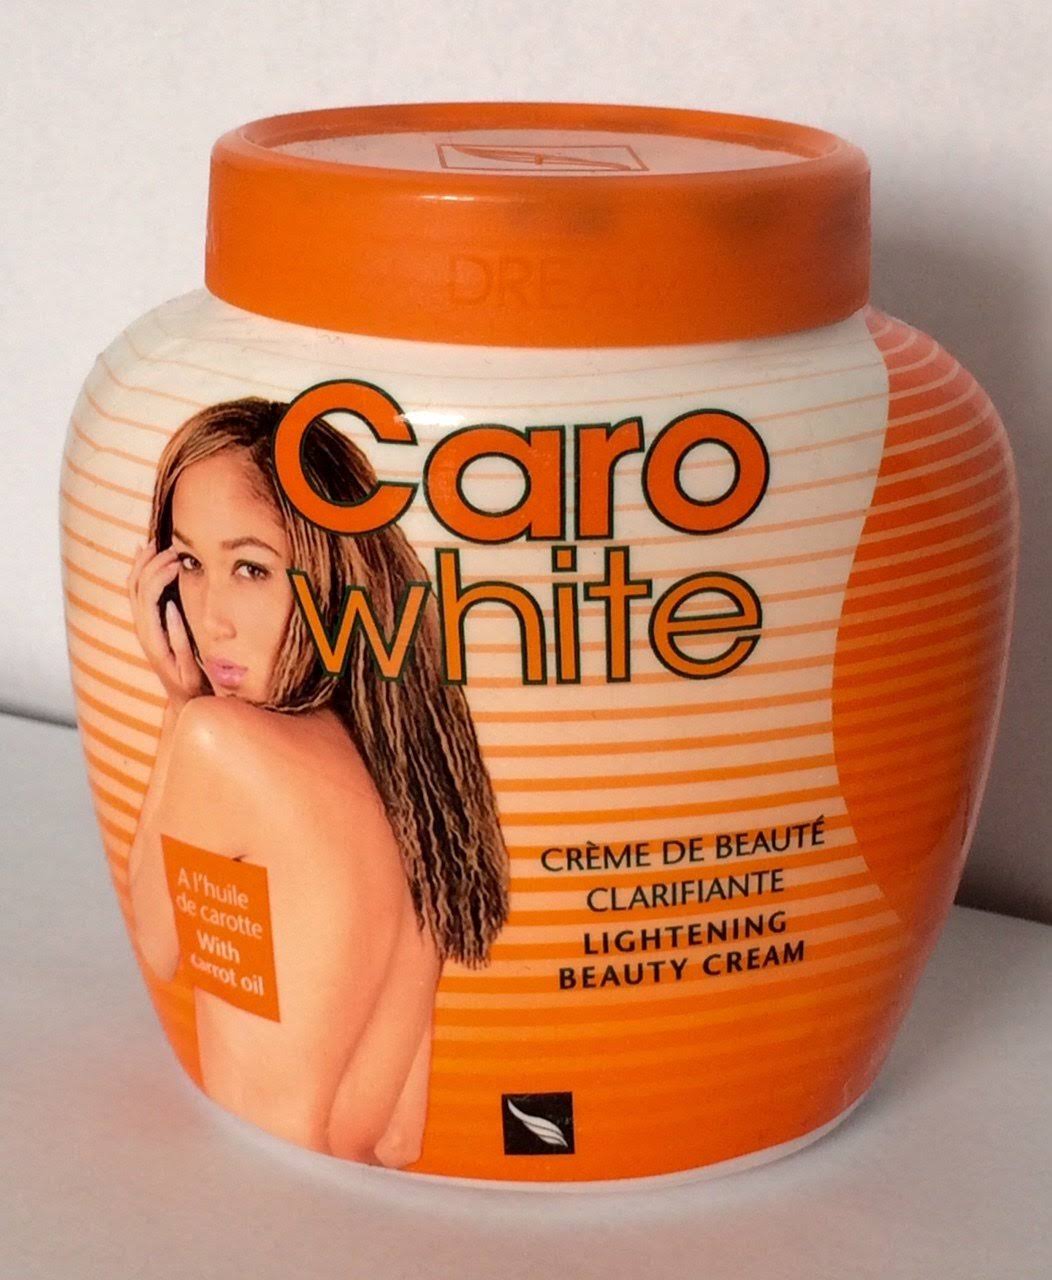 Caro White Lightening Beauty Cream with Carrot Oil